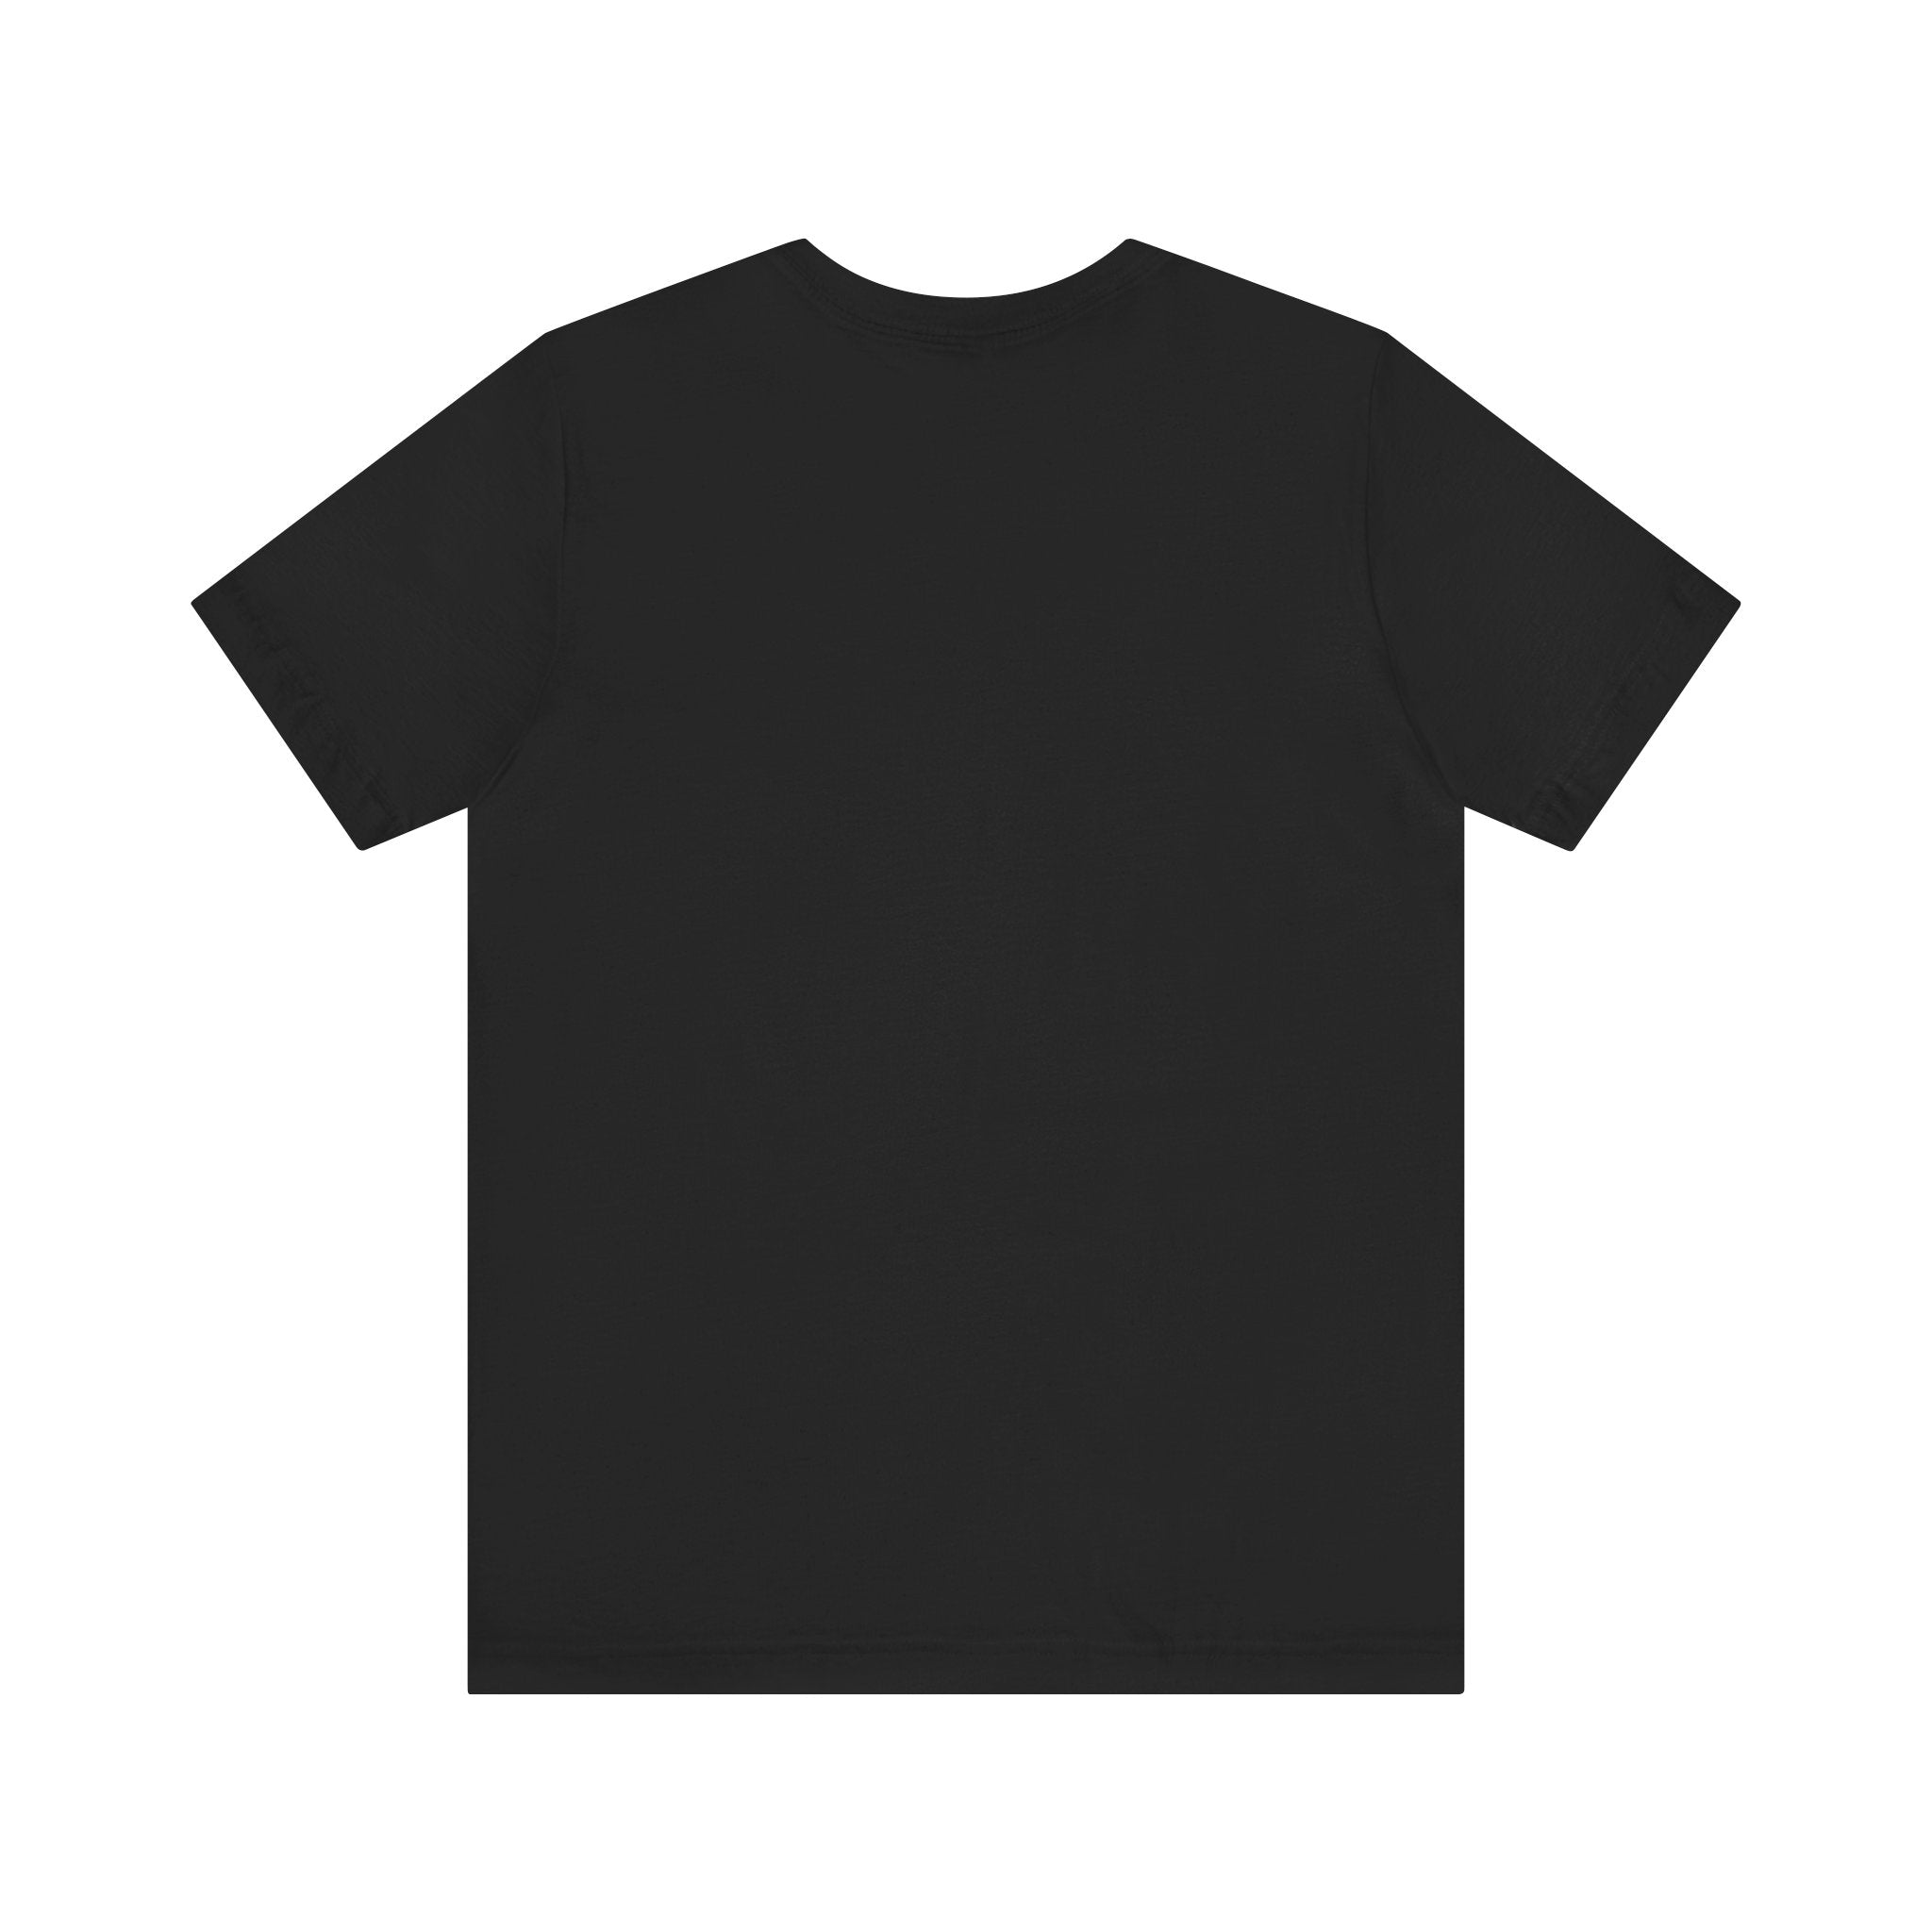 Lotus Flower Graphic, Yoga Unisex Jersey Short Sleeve Tshirt, Black or White